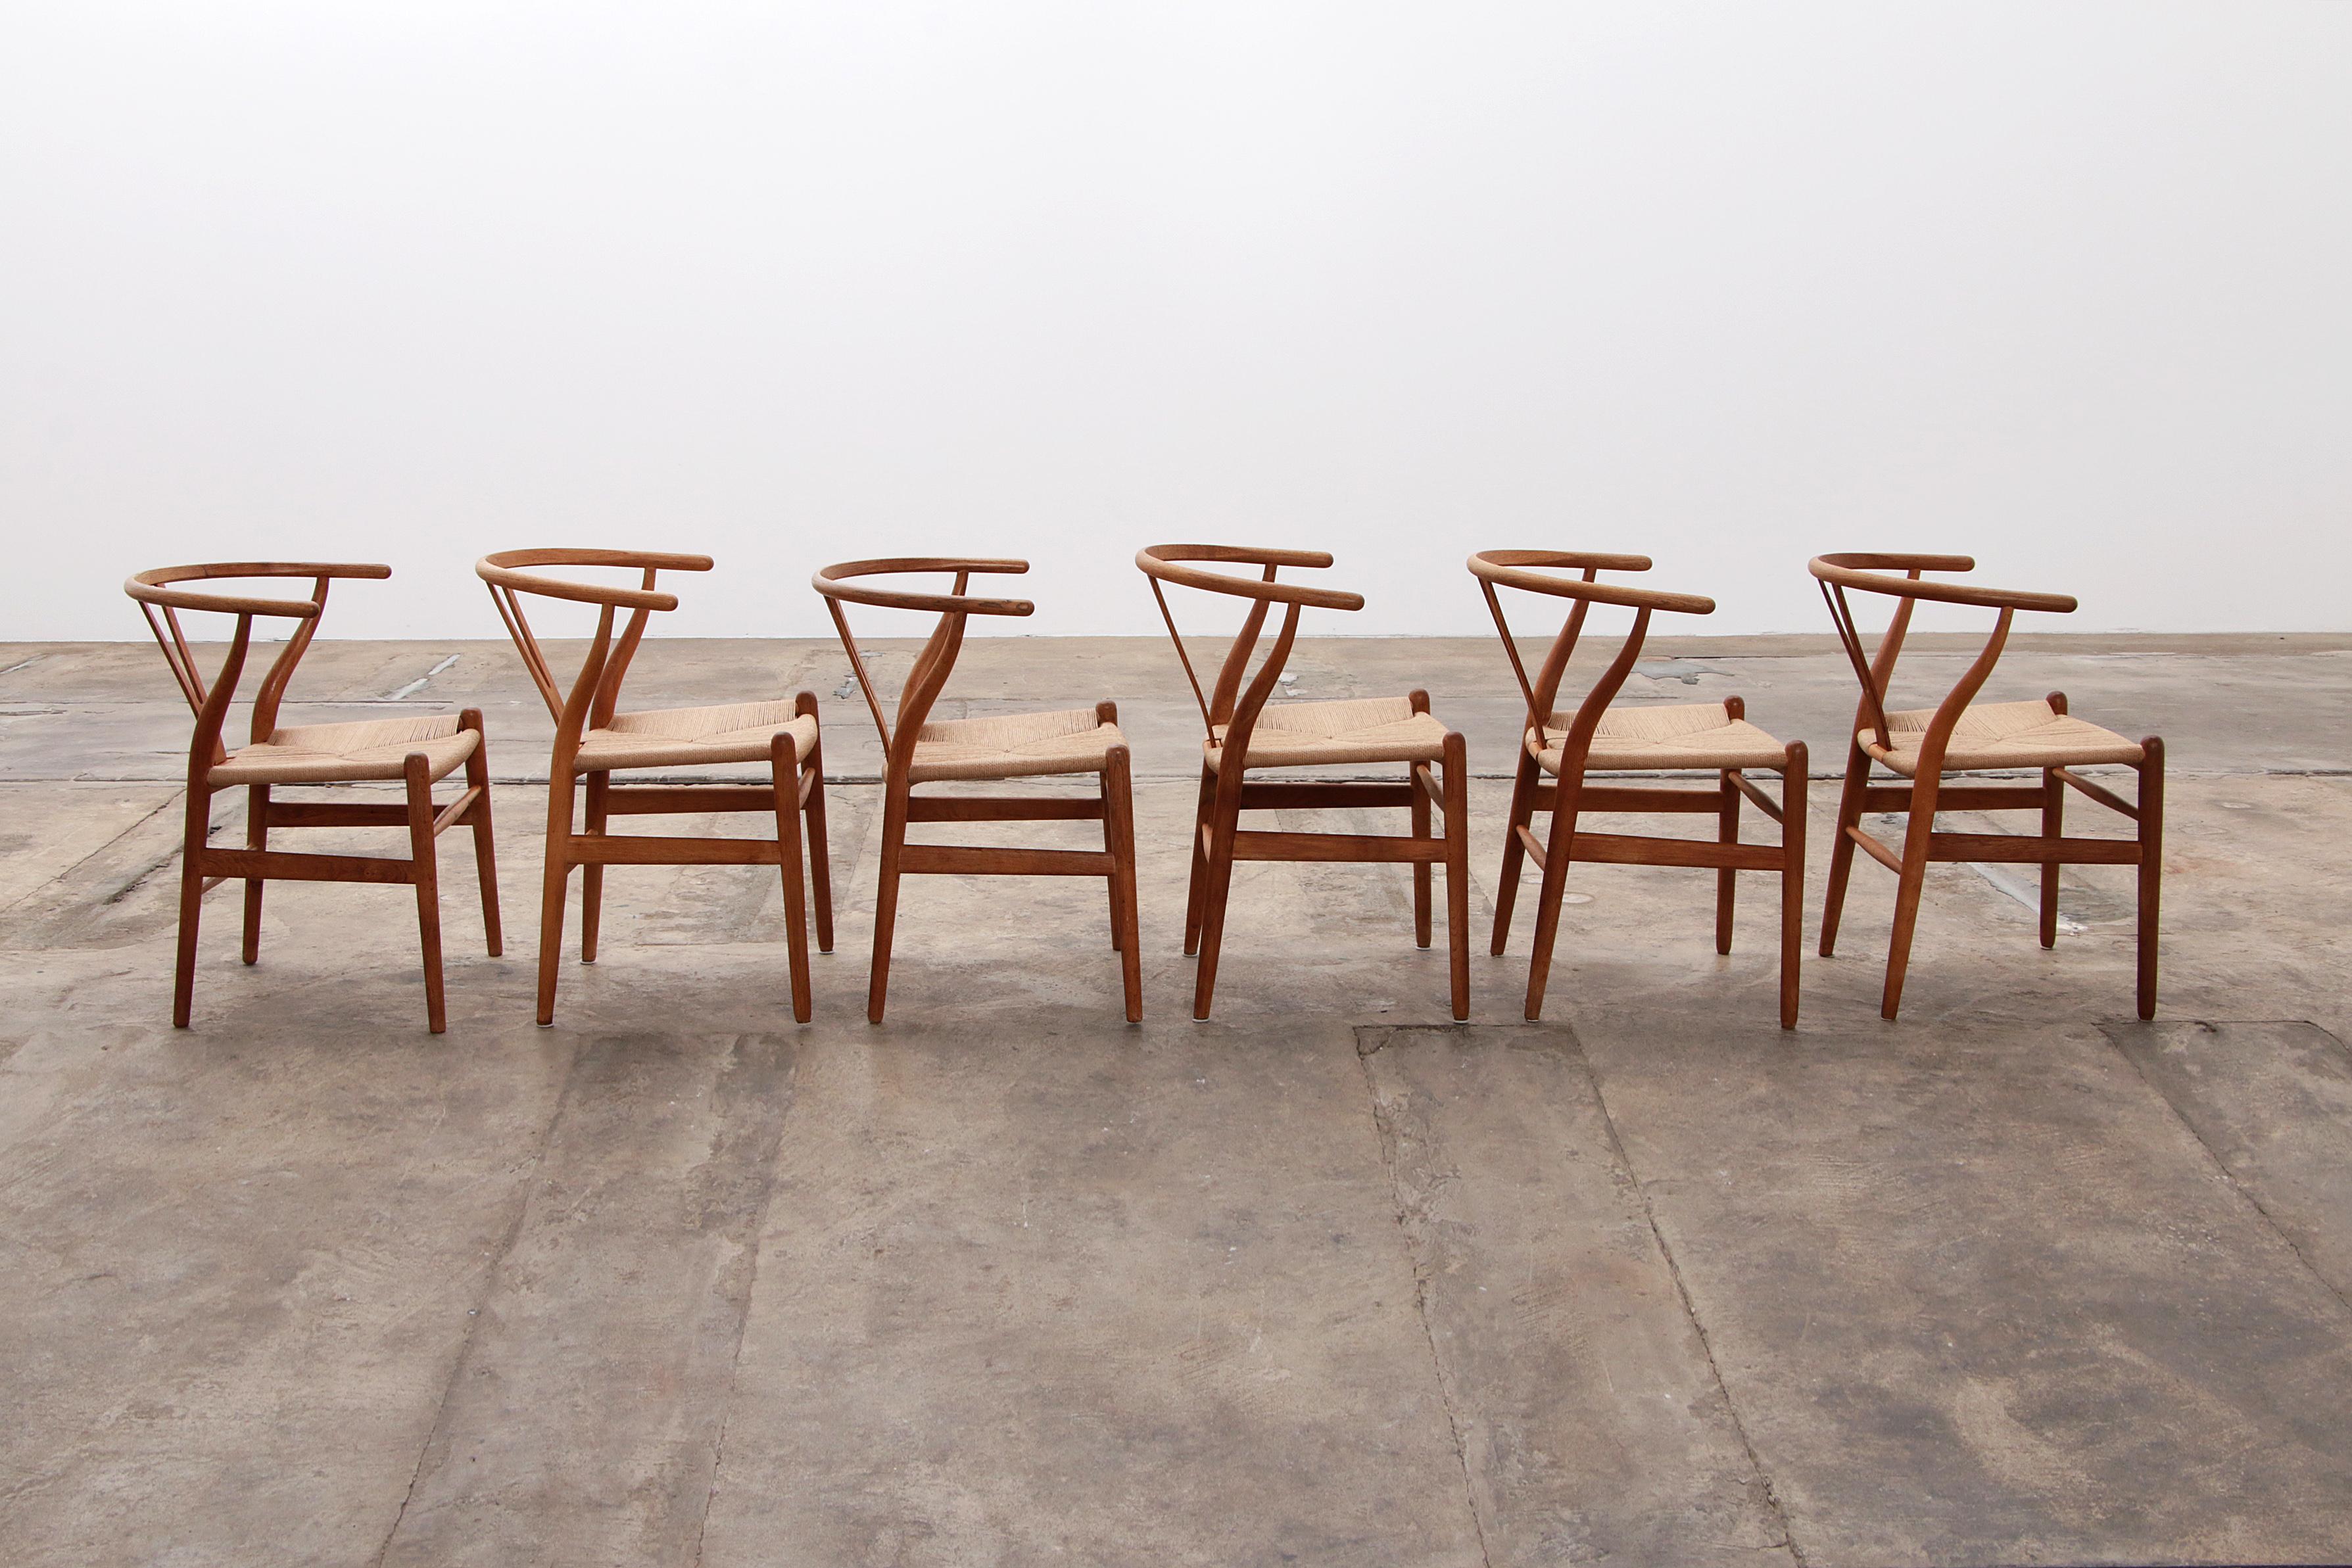 Late 20th Century Hans Wegner Oak Wishbone Chairs made by Carl Hansen&Son